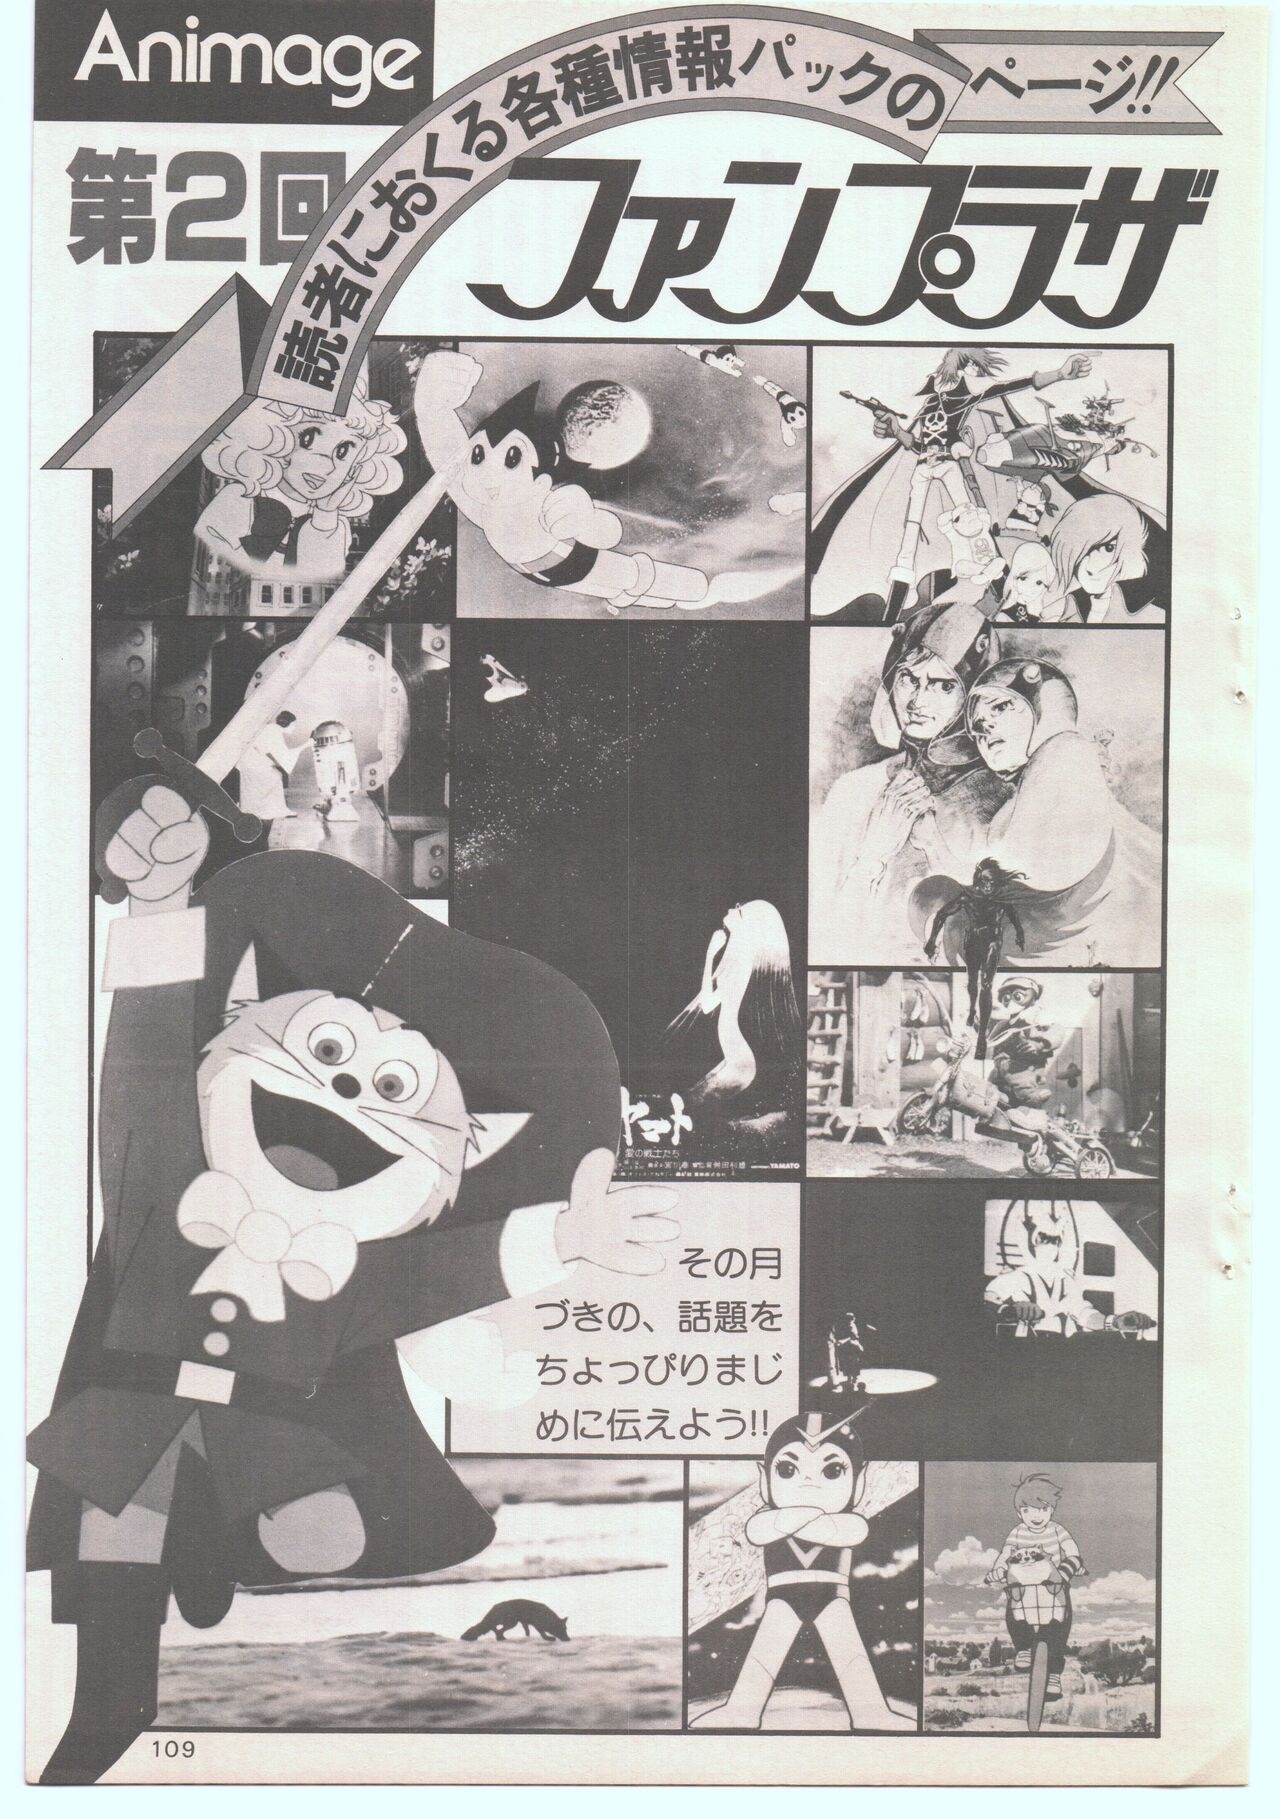 Animage 1978 v002 (2nd Issue) 104